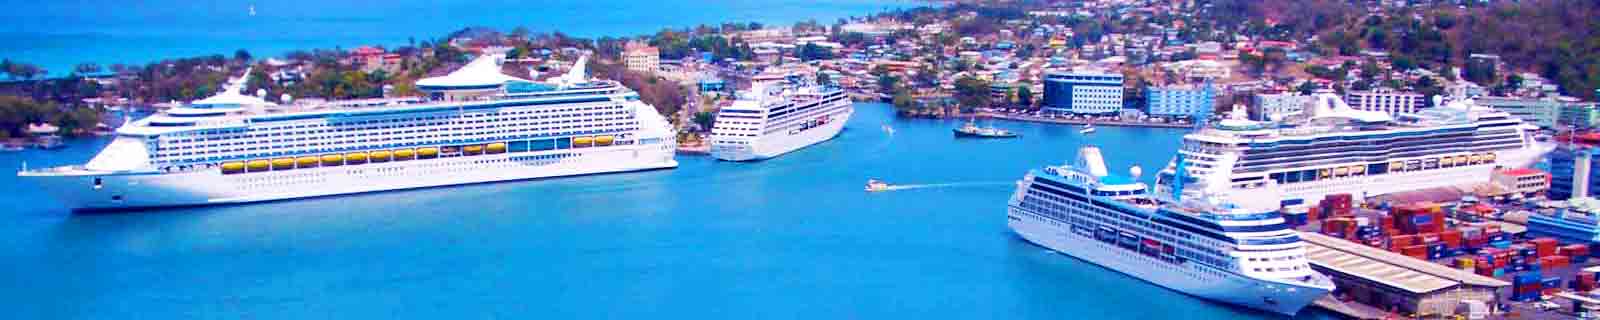 Panoramic photo of Saint Lucia (Castries) cruise port